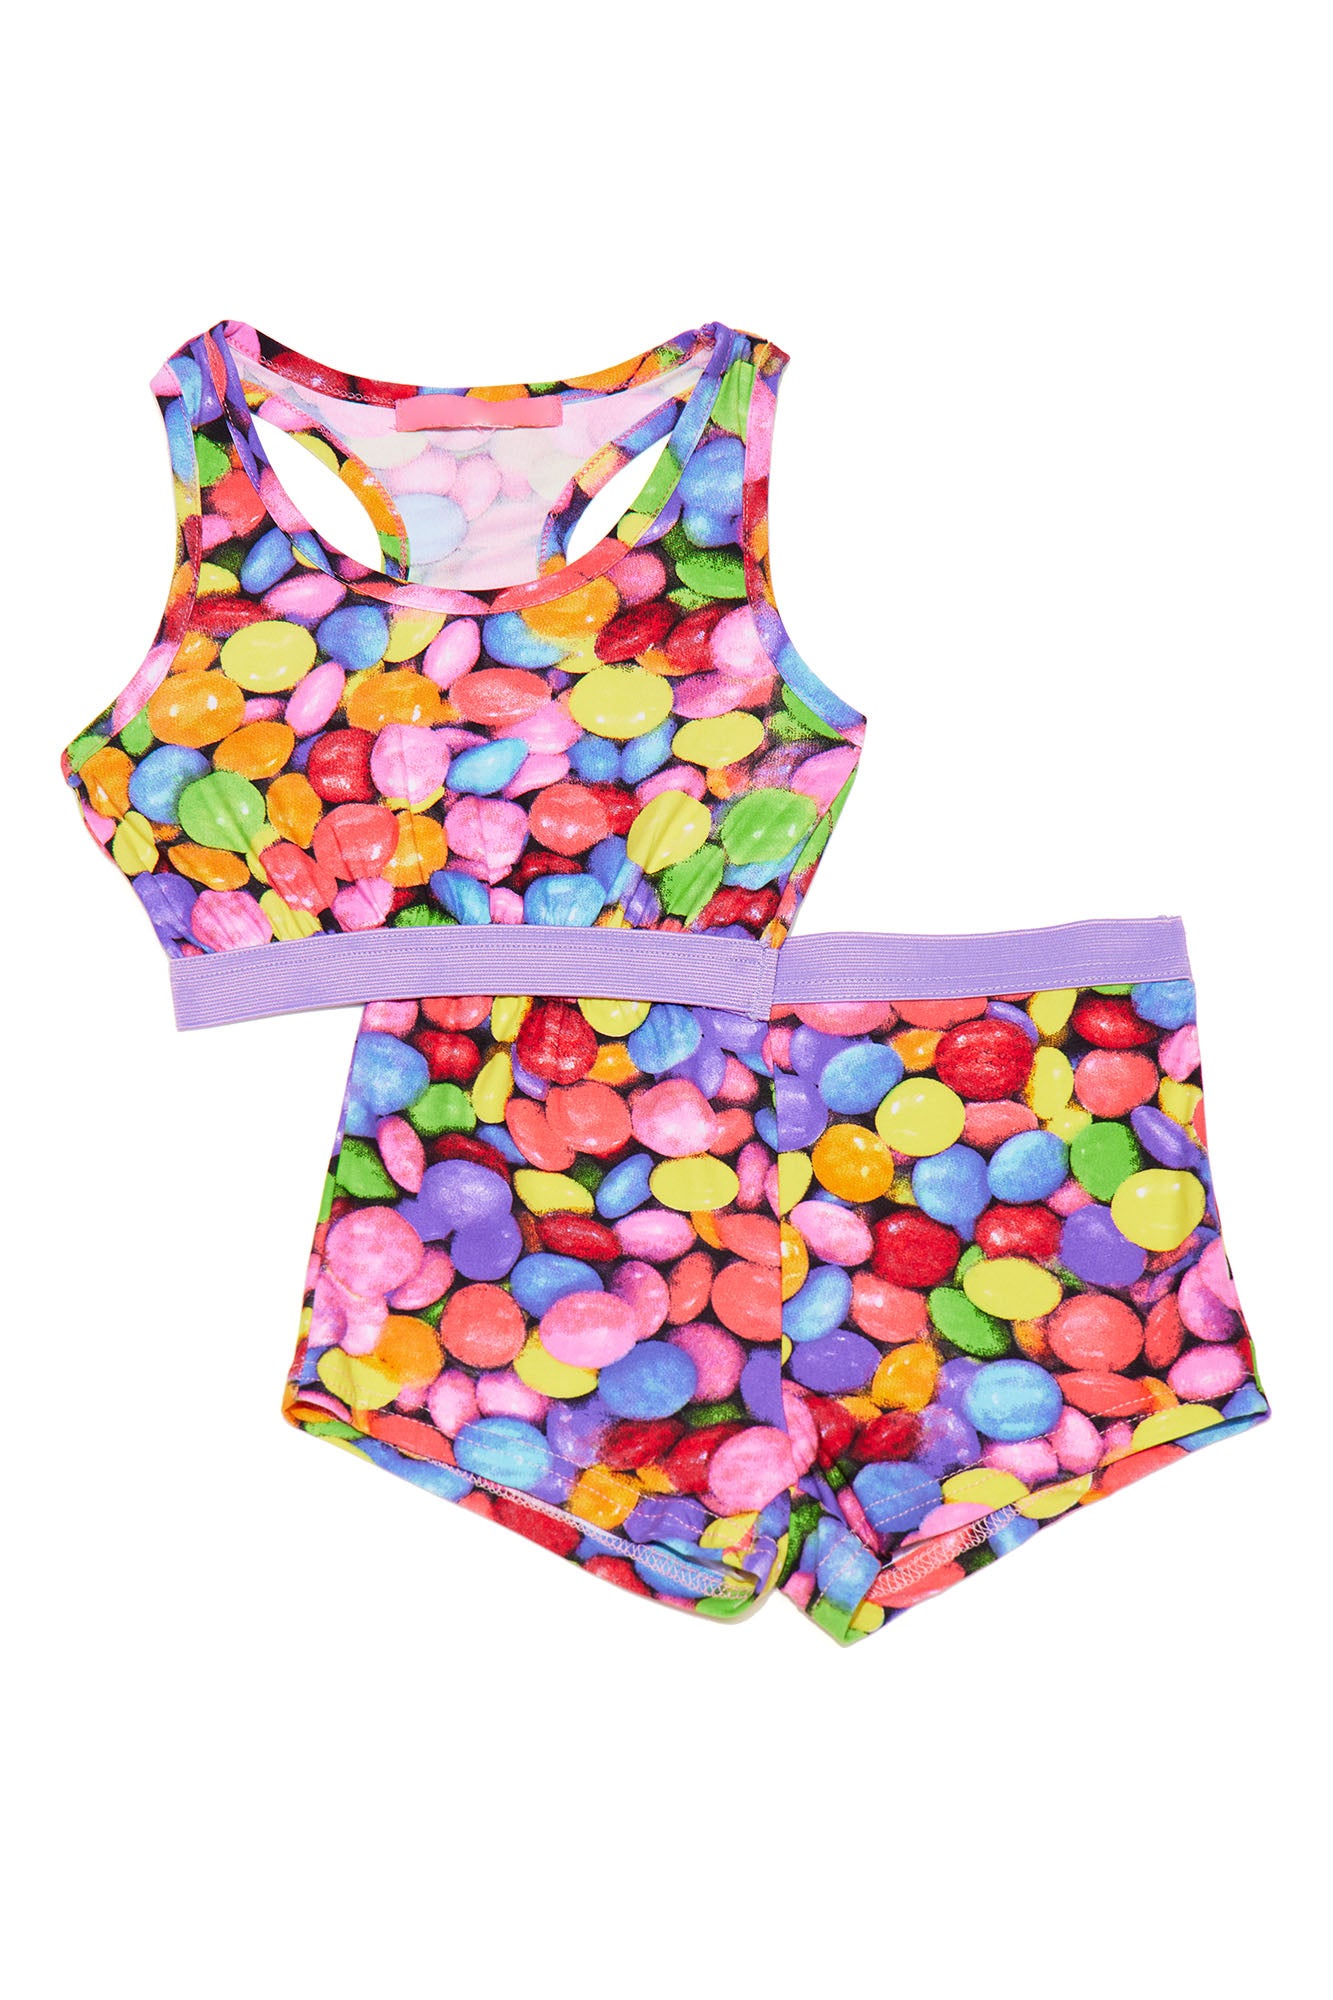 Mini Candy Queen Bra And Panty Set - Multi Color, Fashion Nova, Kids  Sleepwear